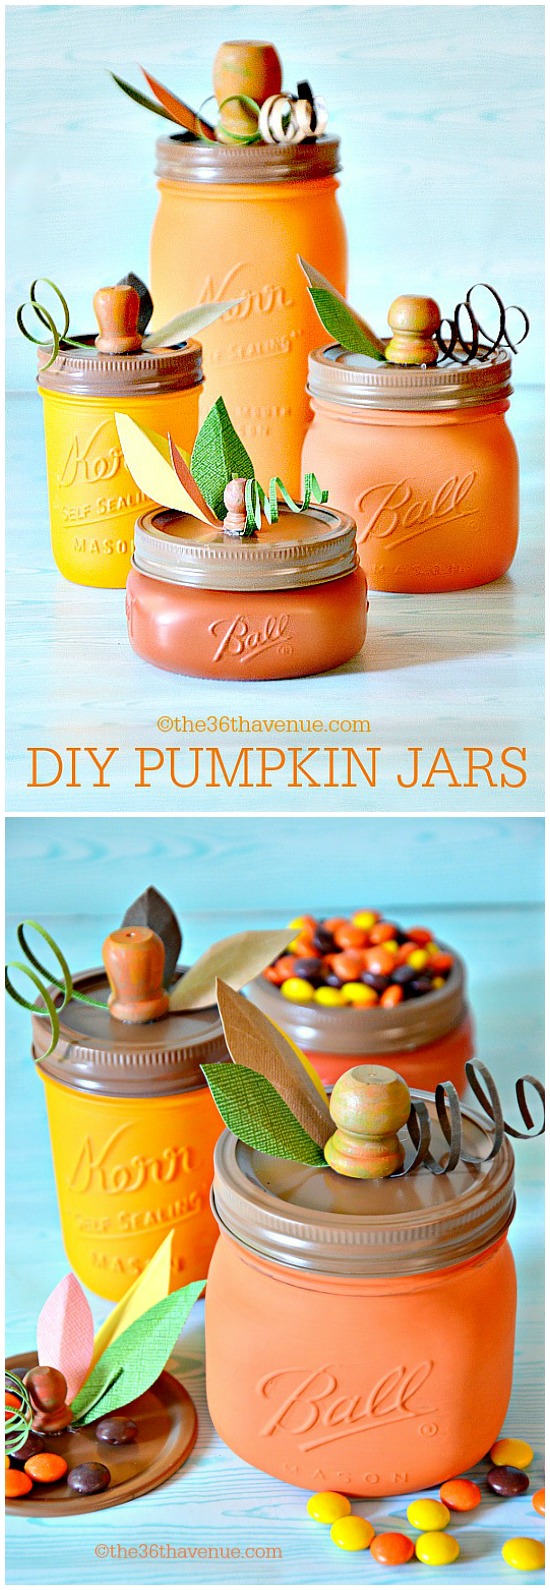 https://www.the36thavenue.com/wp-content/uploads/2014/08/DIY-Pumpkin-Jars-800.jpg